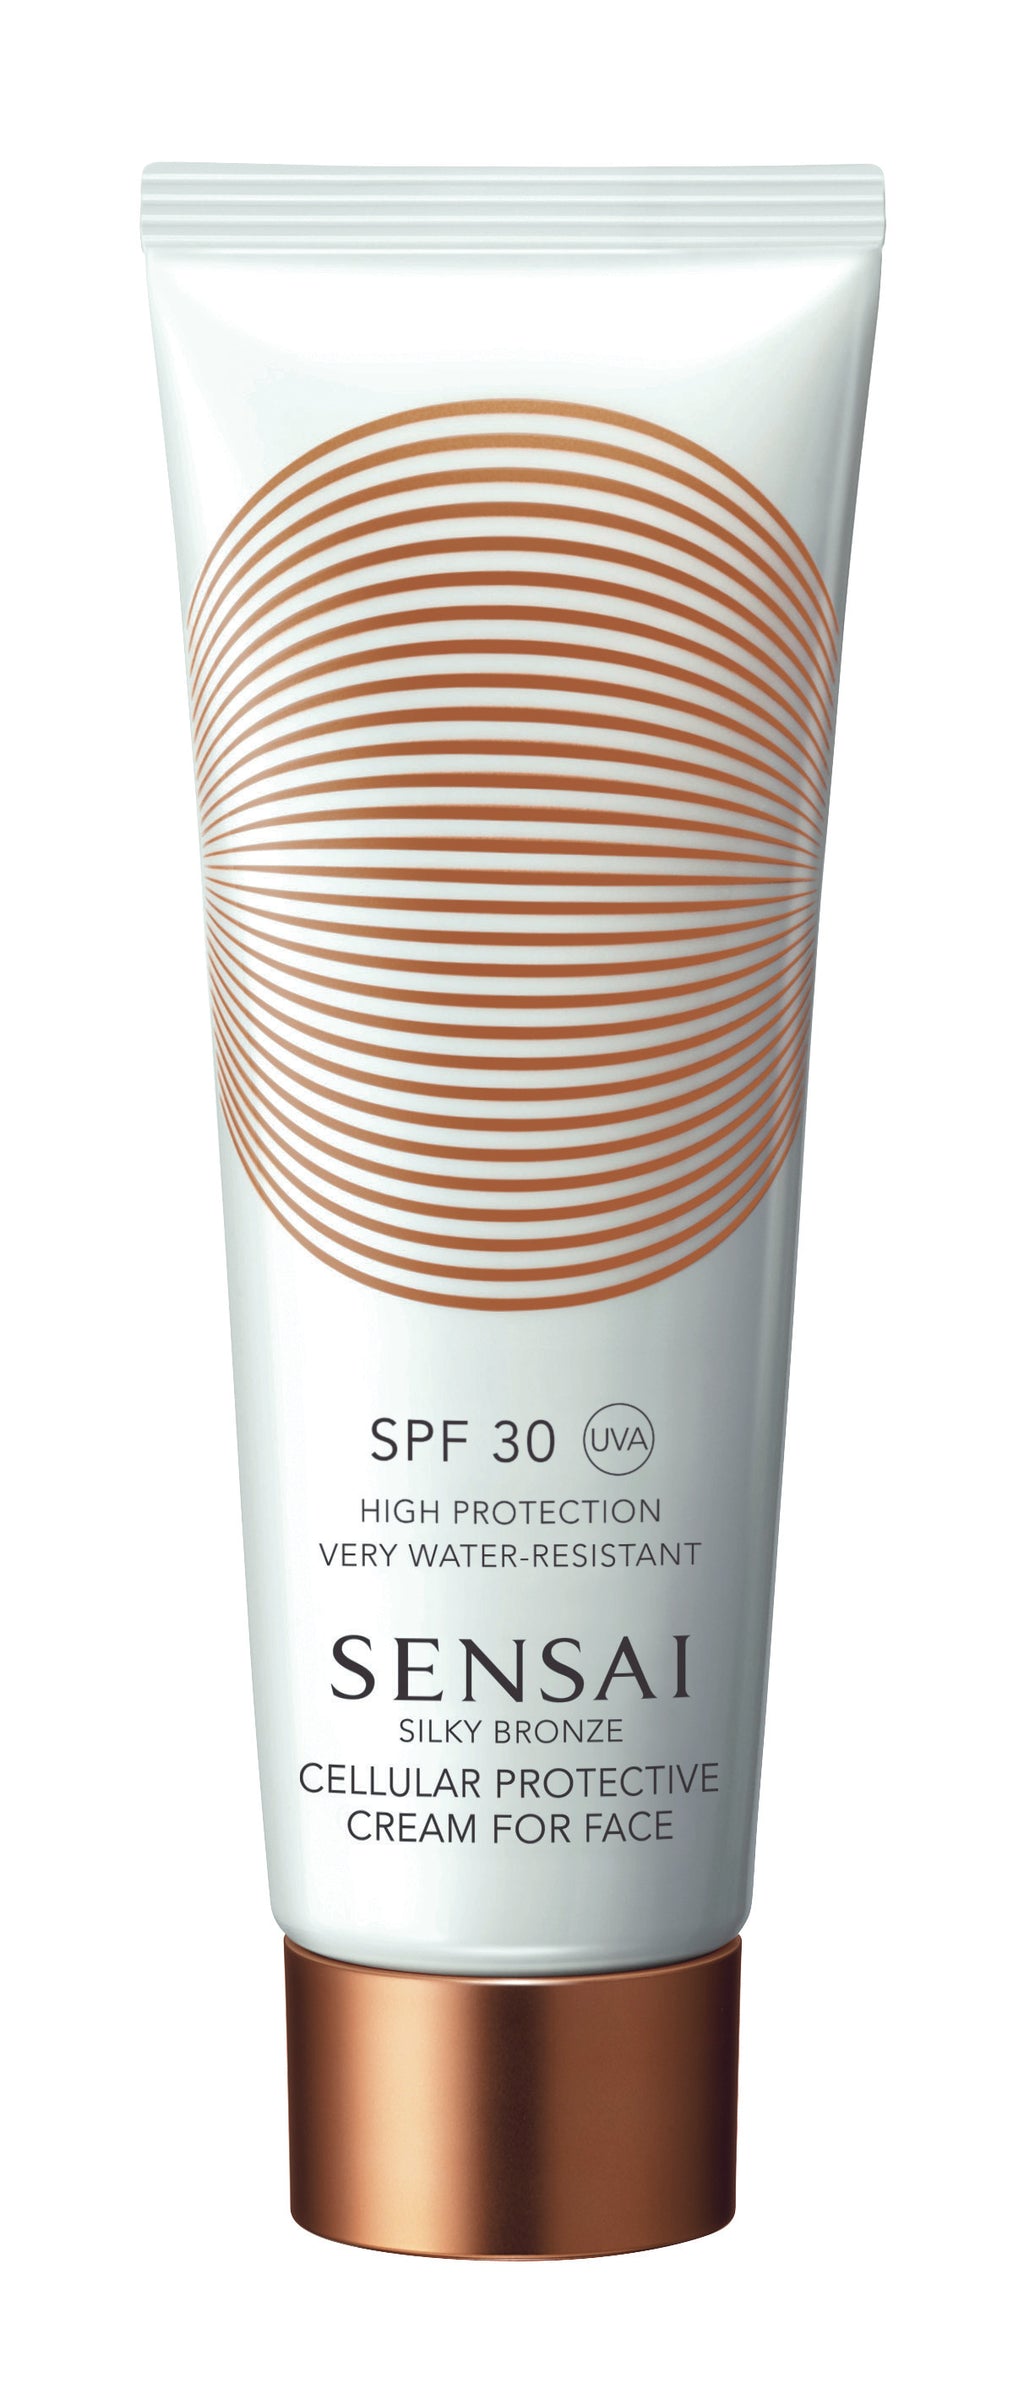 Sensai – Silky Bronze – Cellular Protective Cream For Face SPF30 - Danae Profumeria